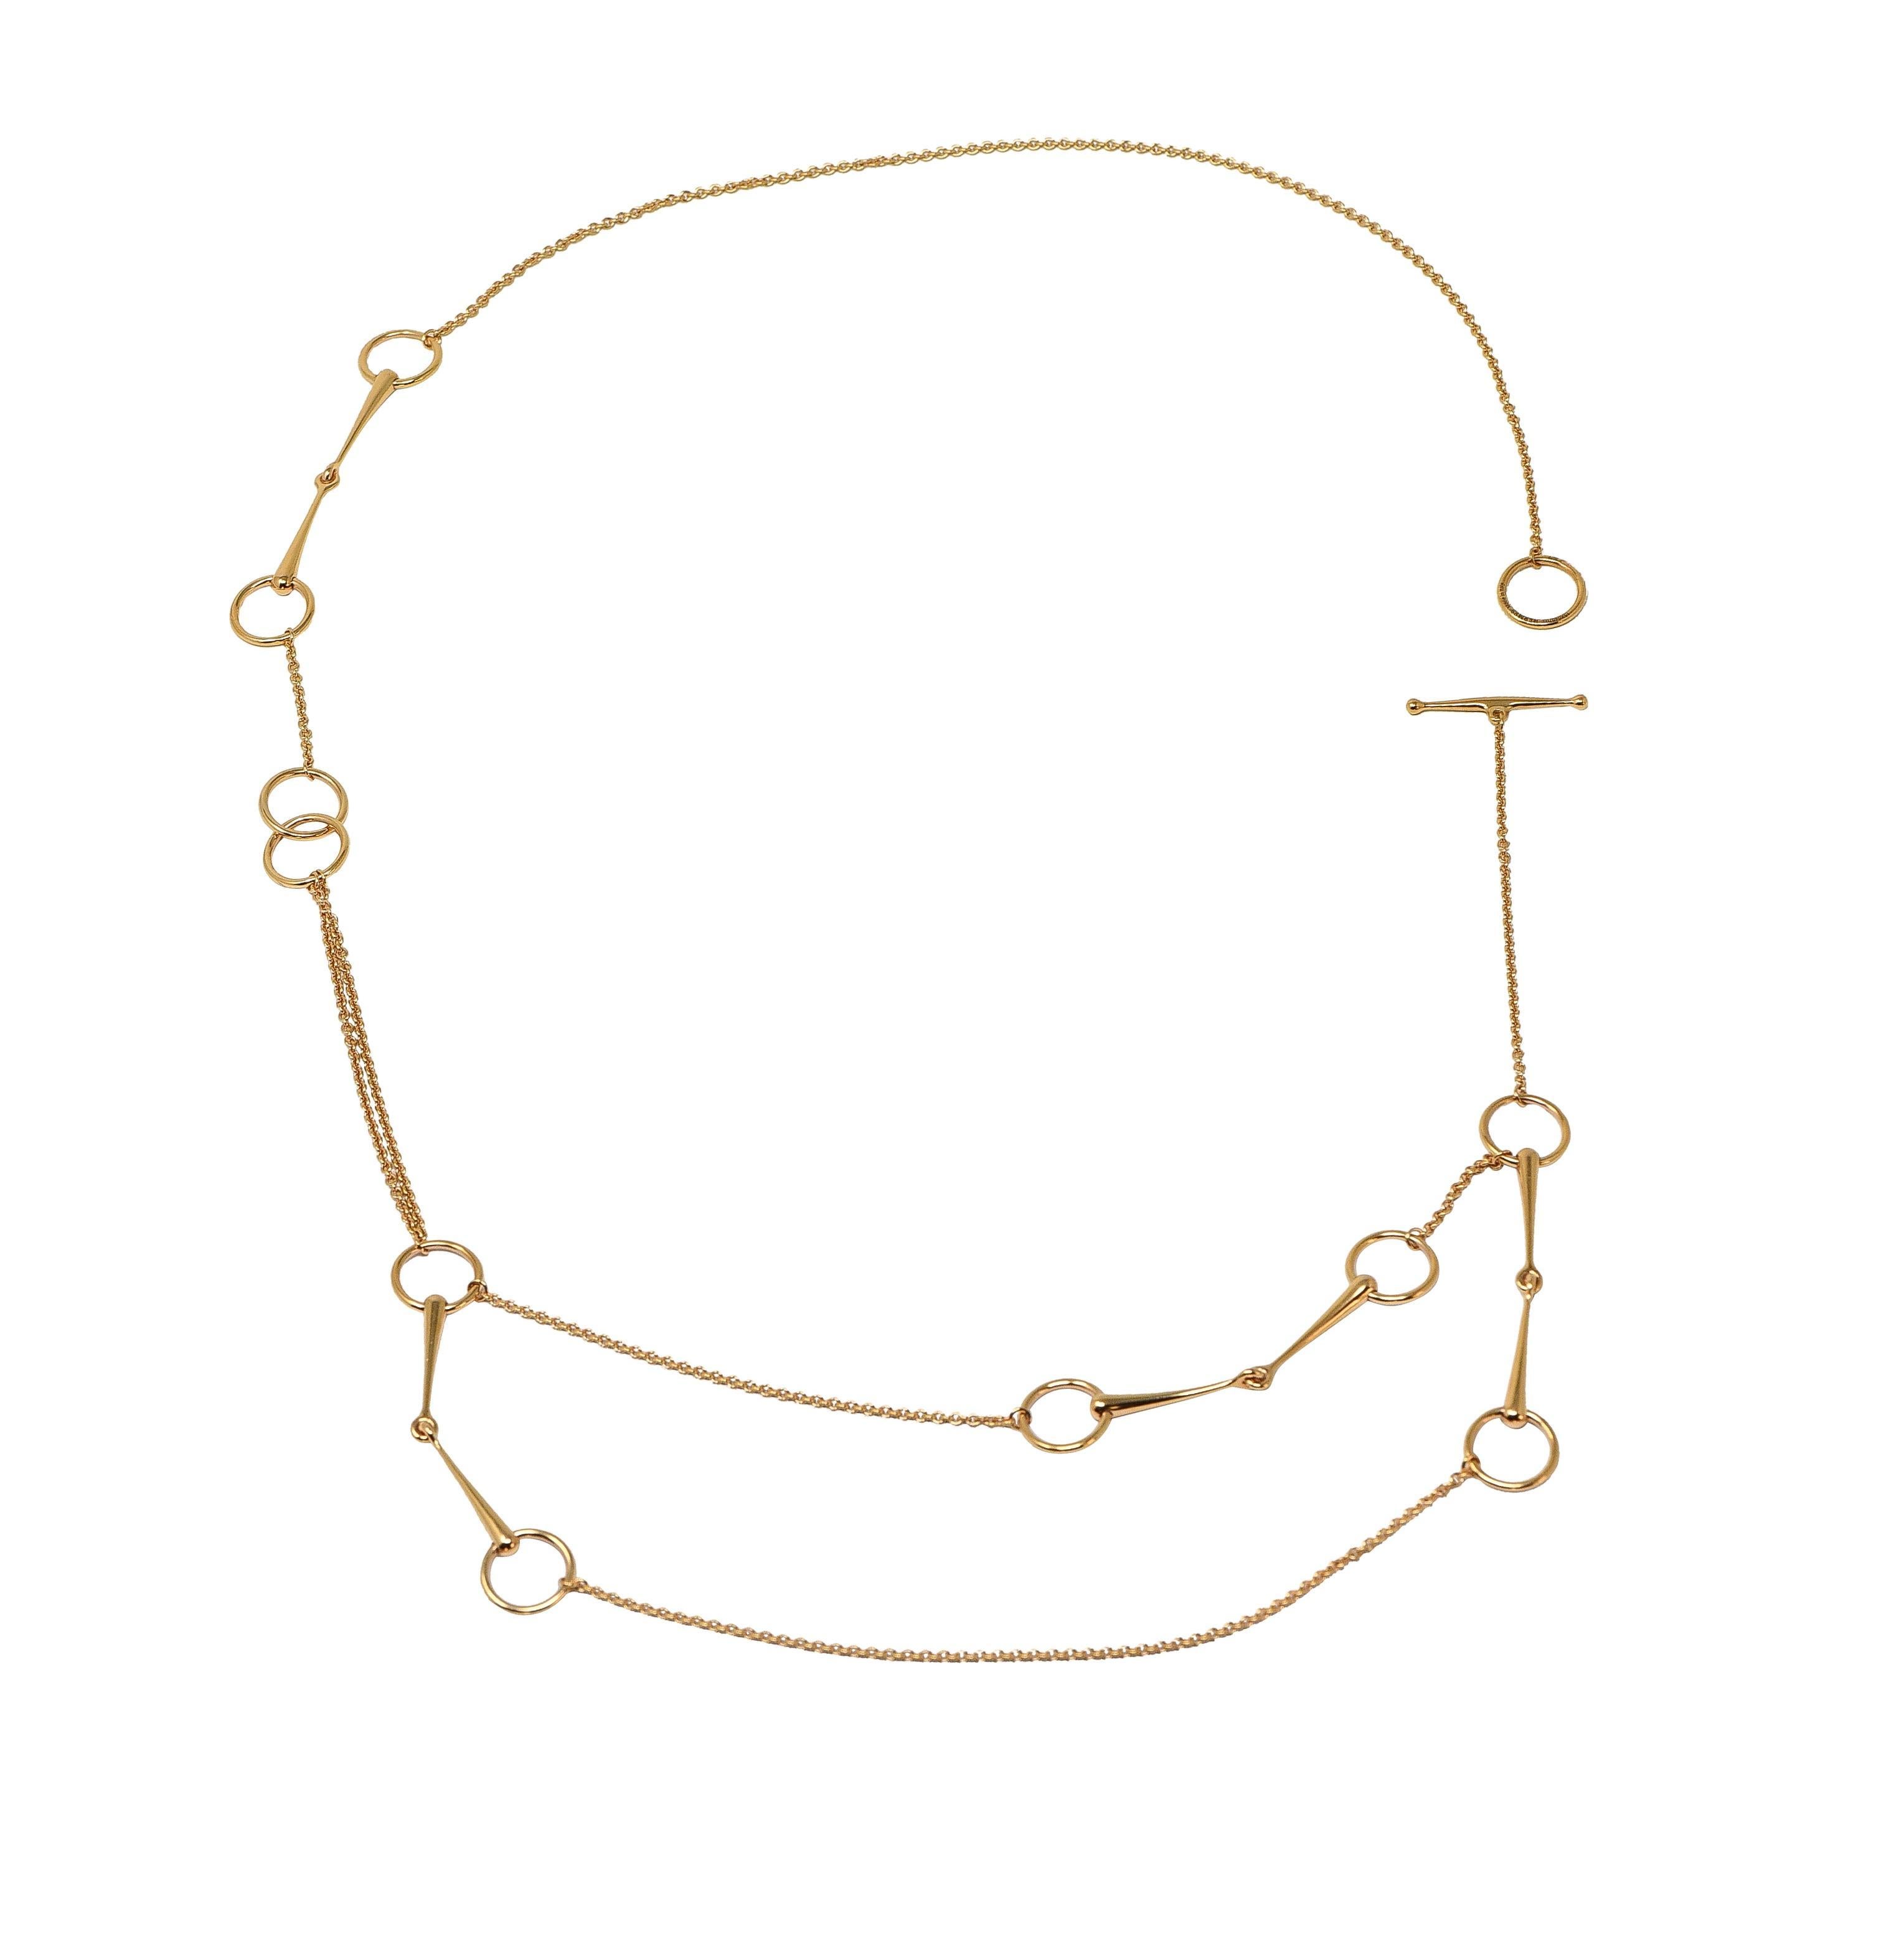 Hermés Contemporary 18 Karat Yellow Gold Filet d'Or Horse-Bit Link Necklace 6